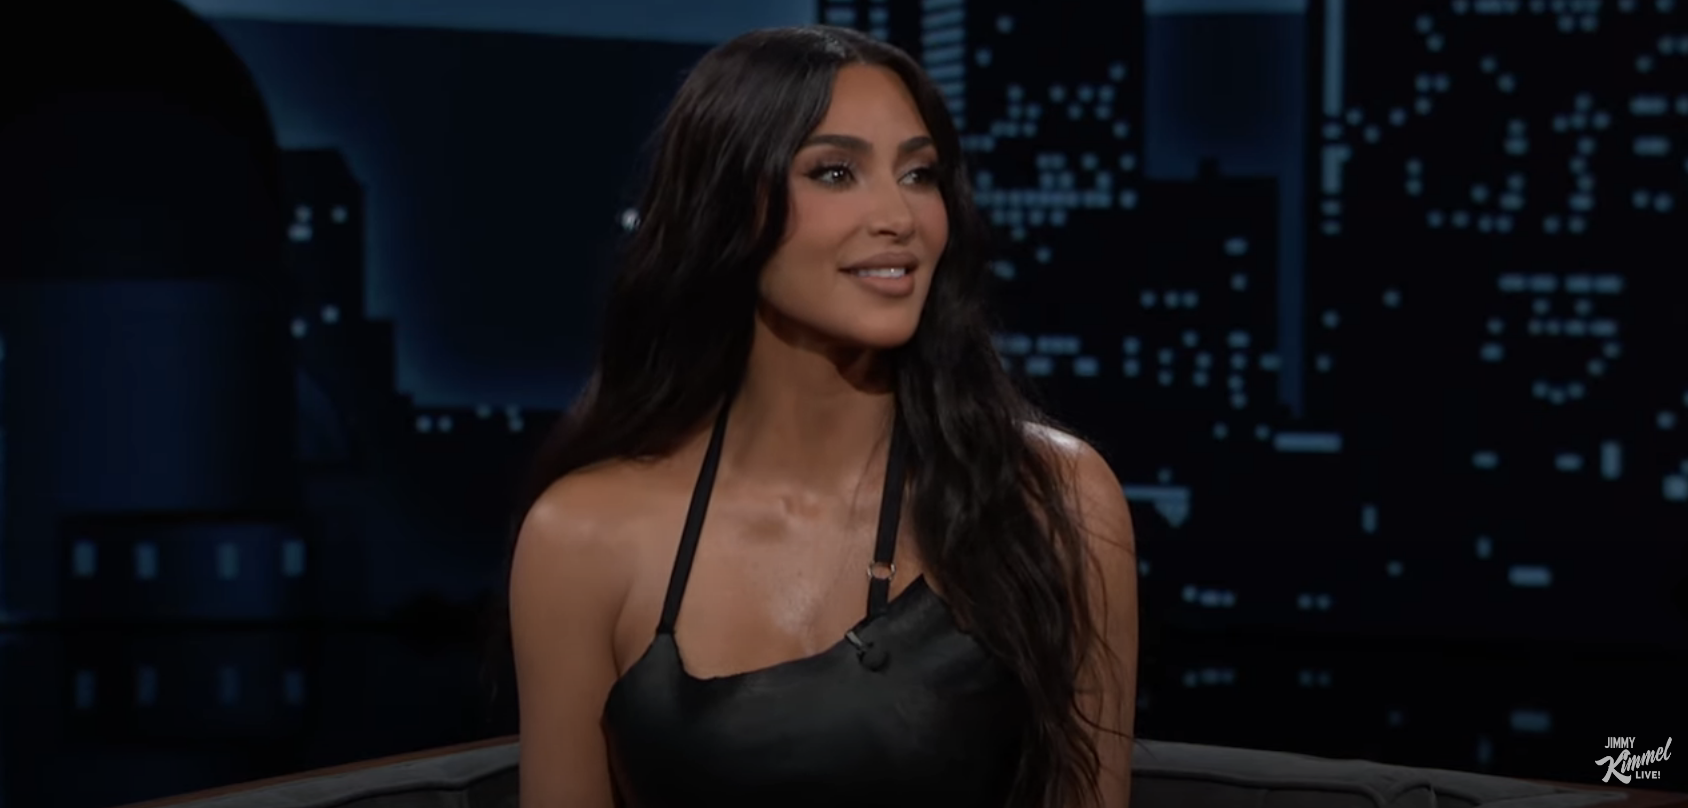 Kim Kardashian in a black top with a cityscape backdrop on a talk show set